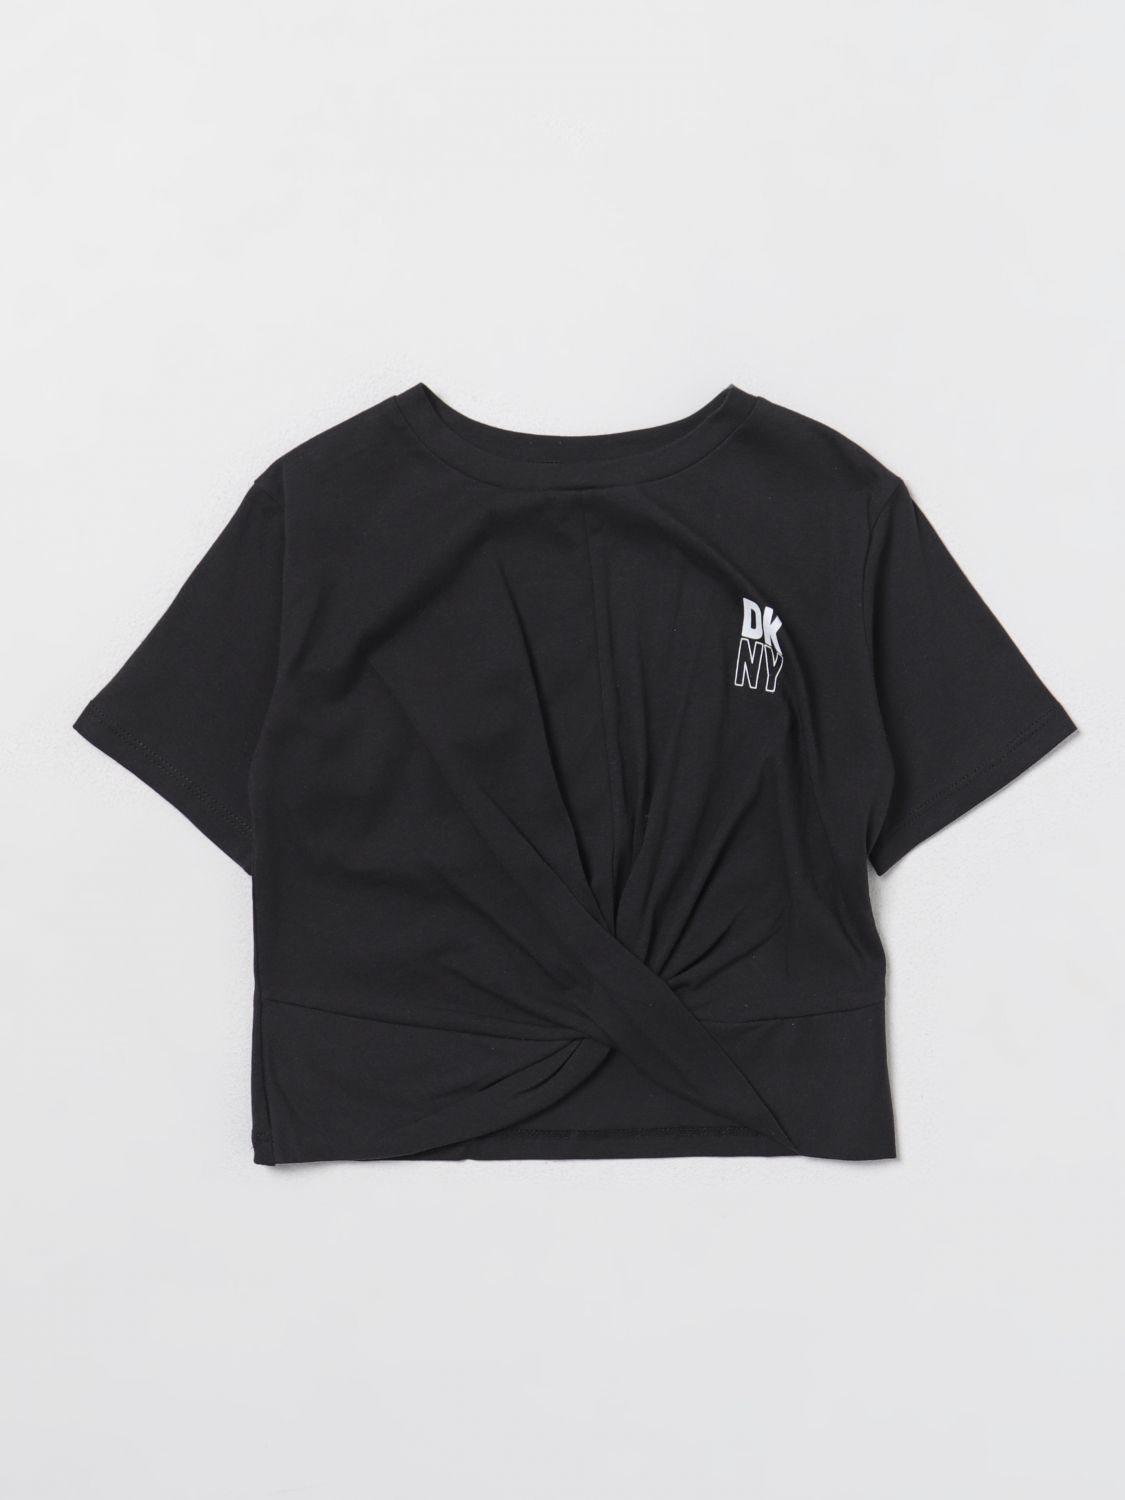 DKNY T-Shirt DKNY Kids colour Black